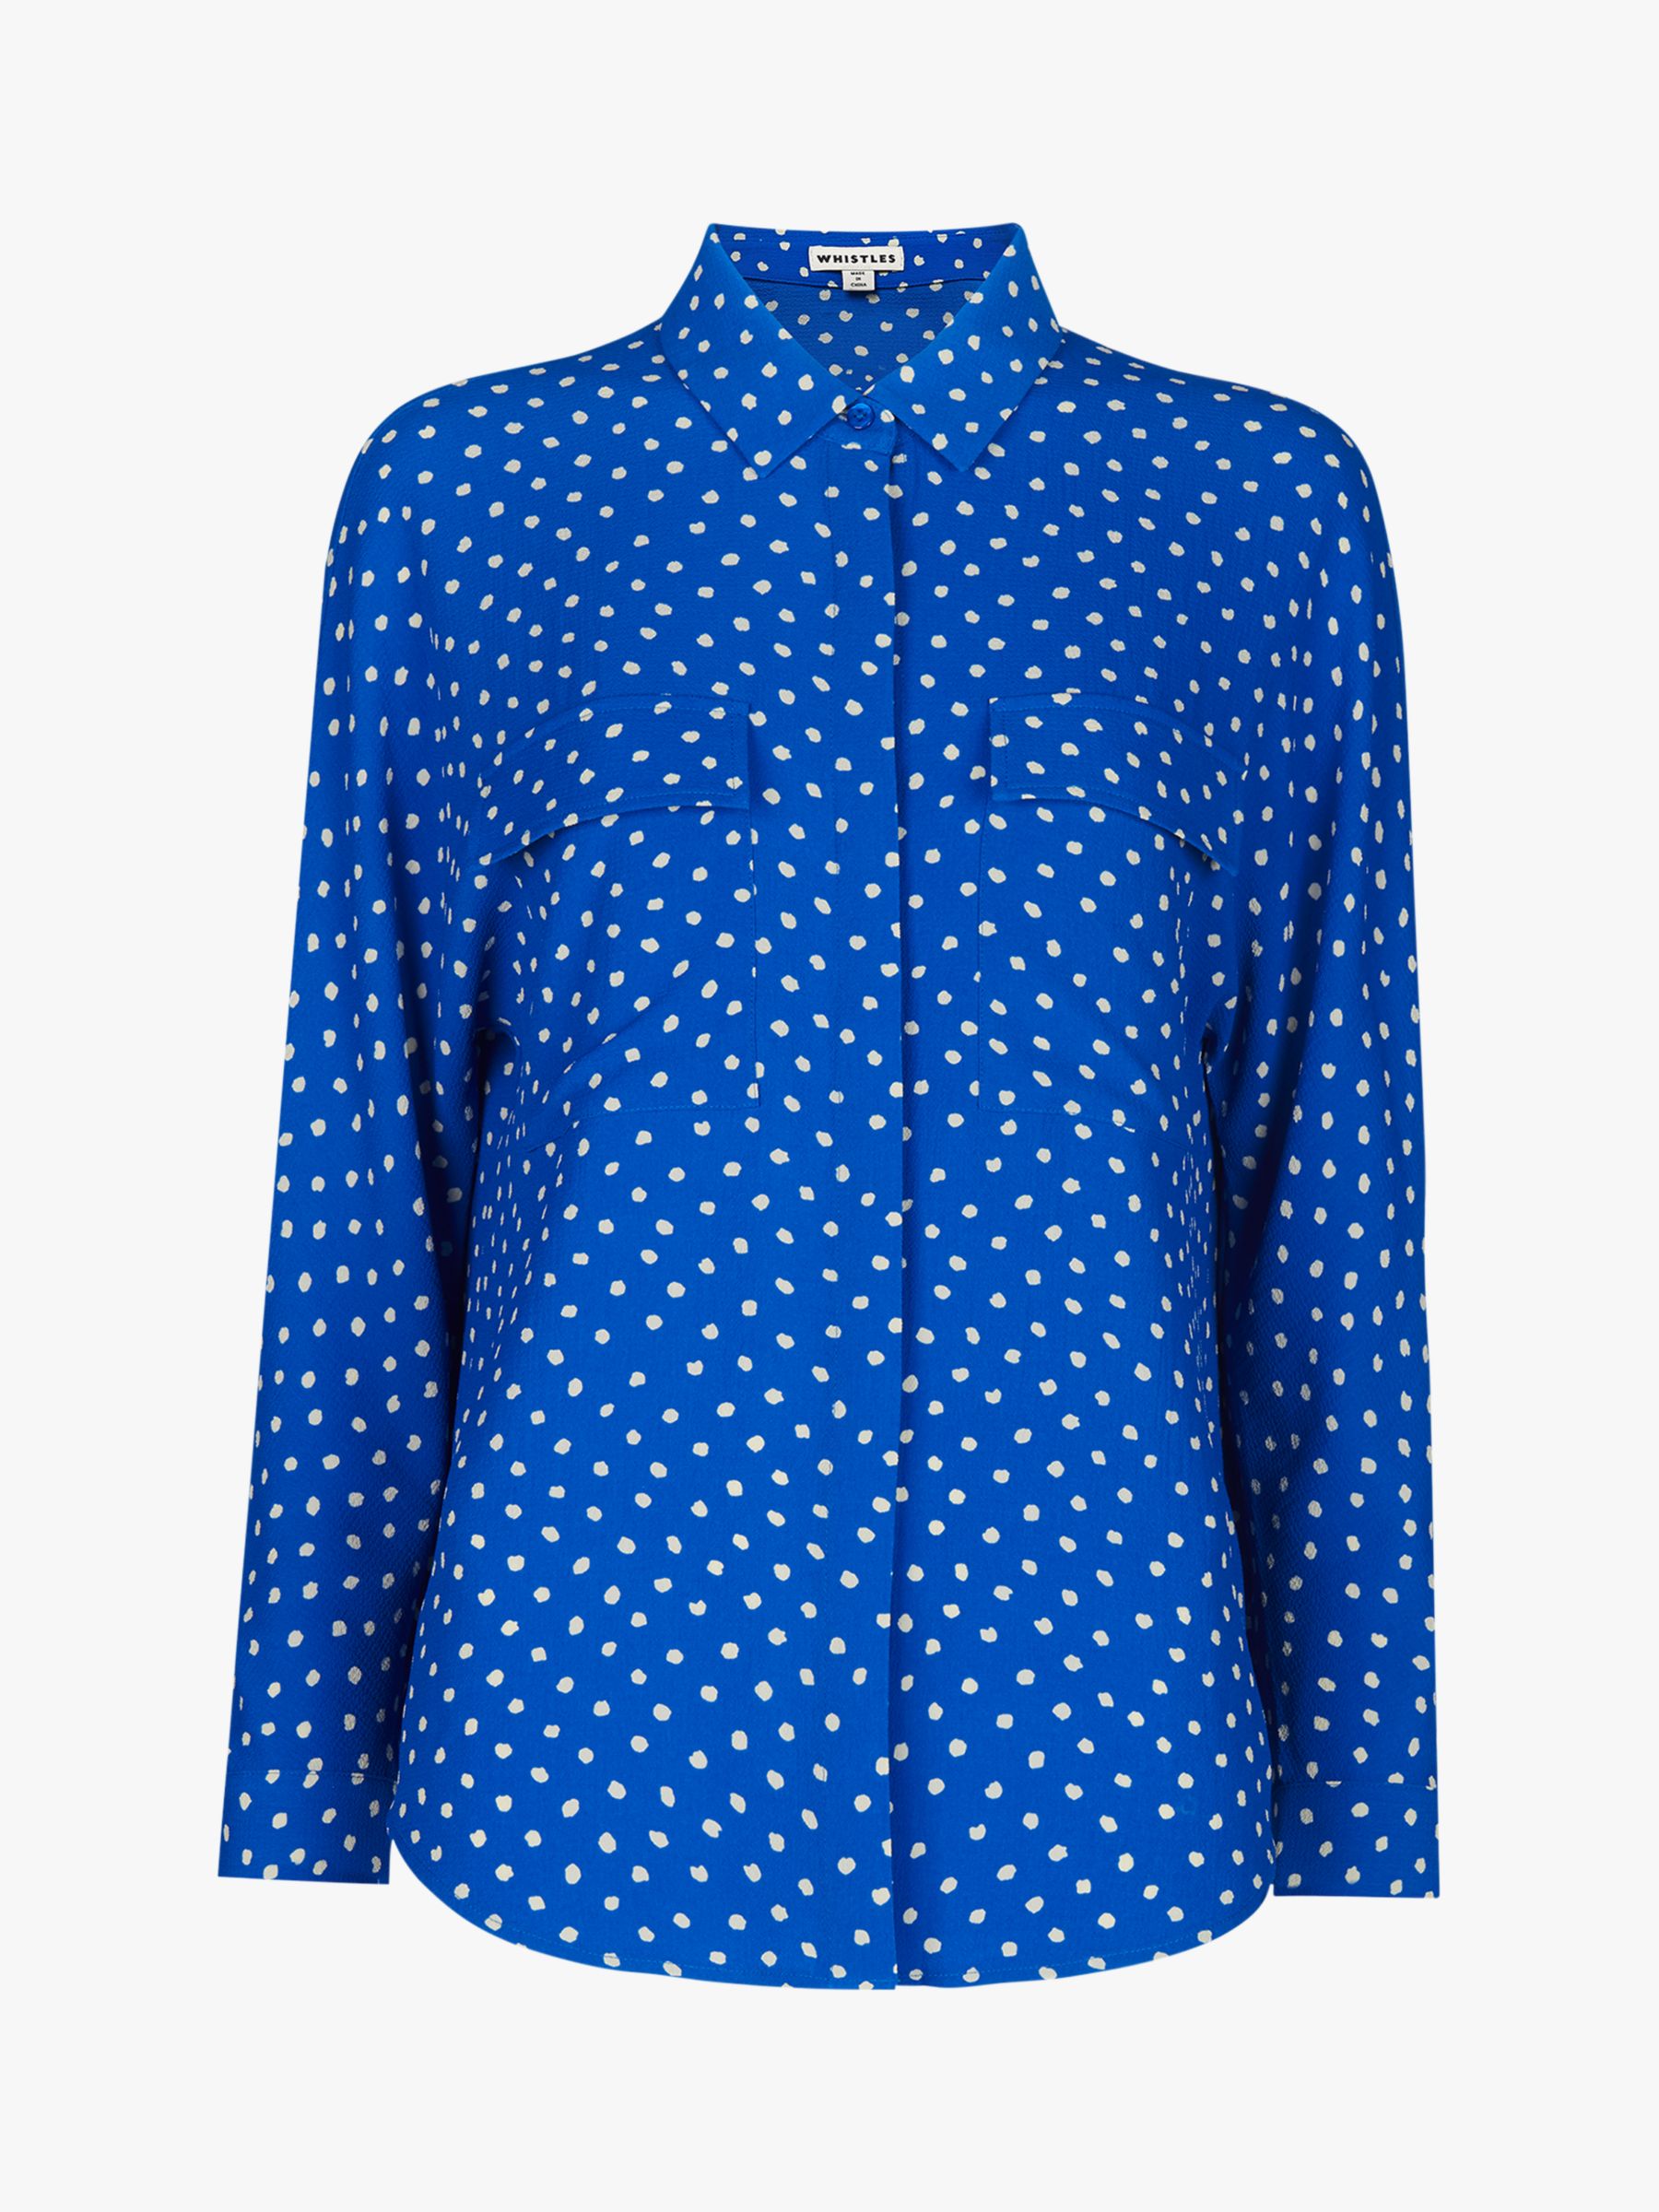 Whistles Selma Abstract Spot Shirt, Blue/Multi at John Lewis & Partners